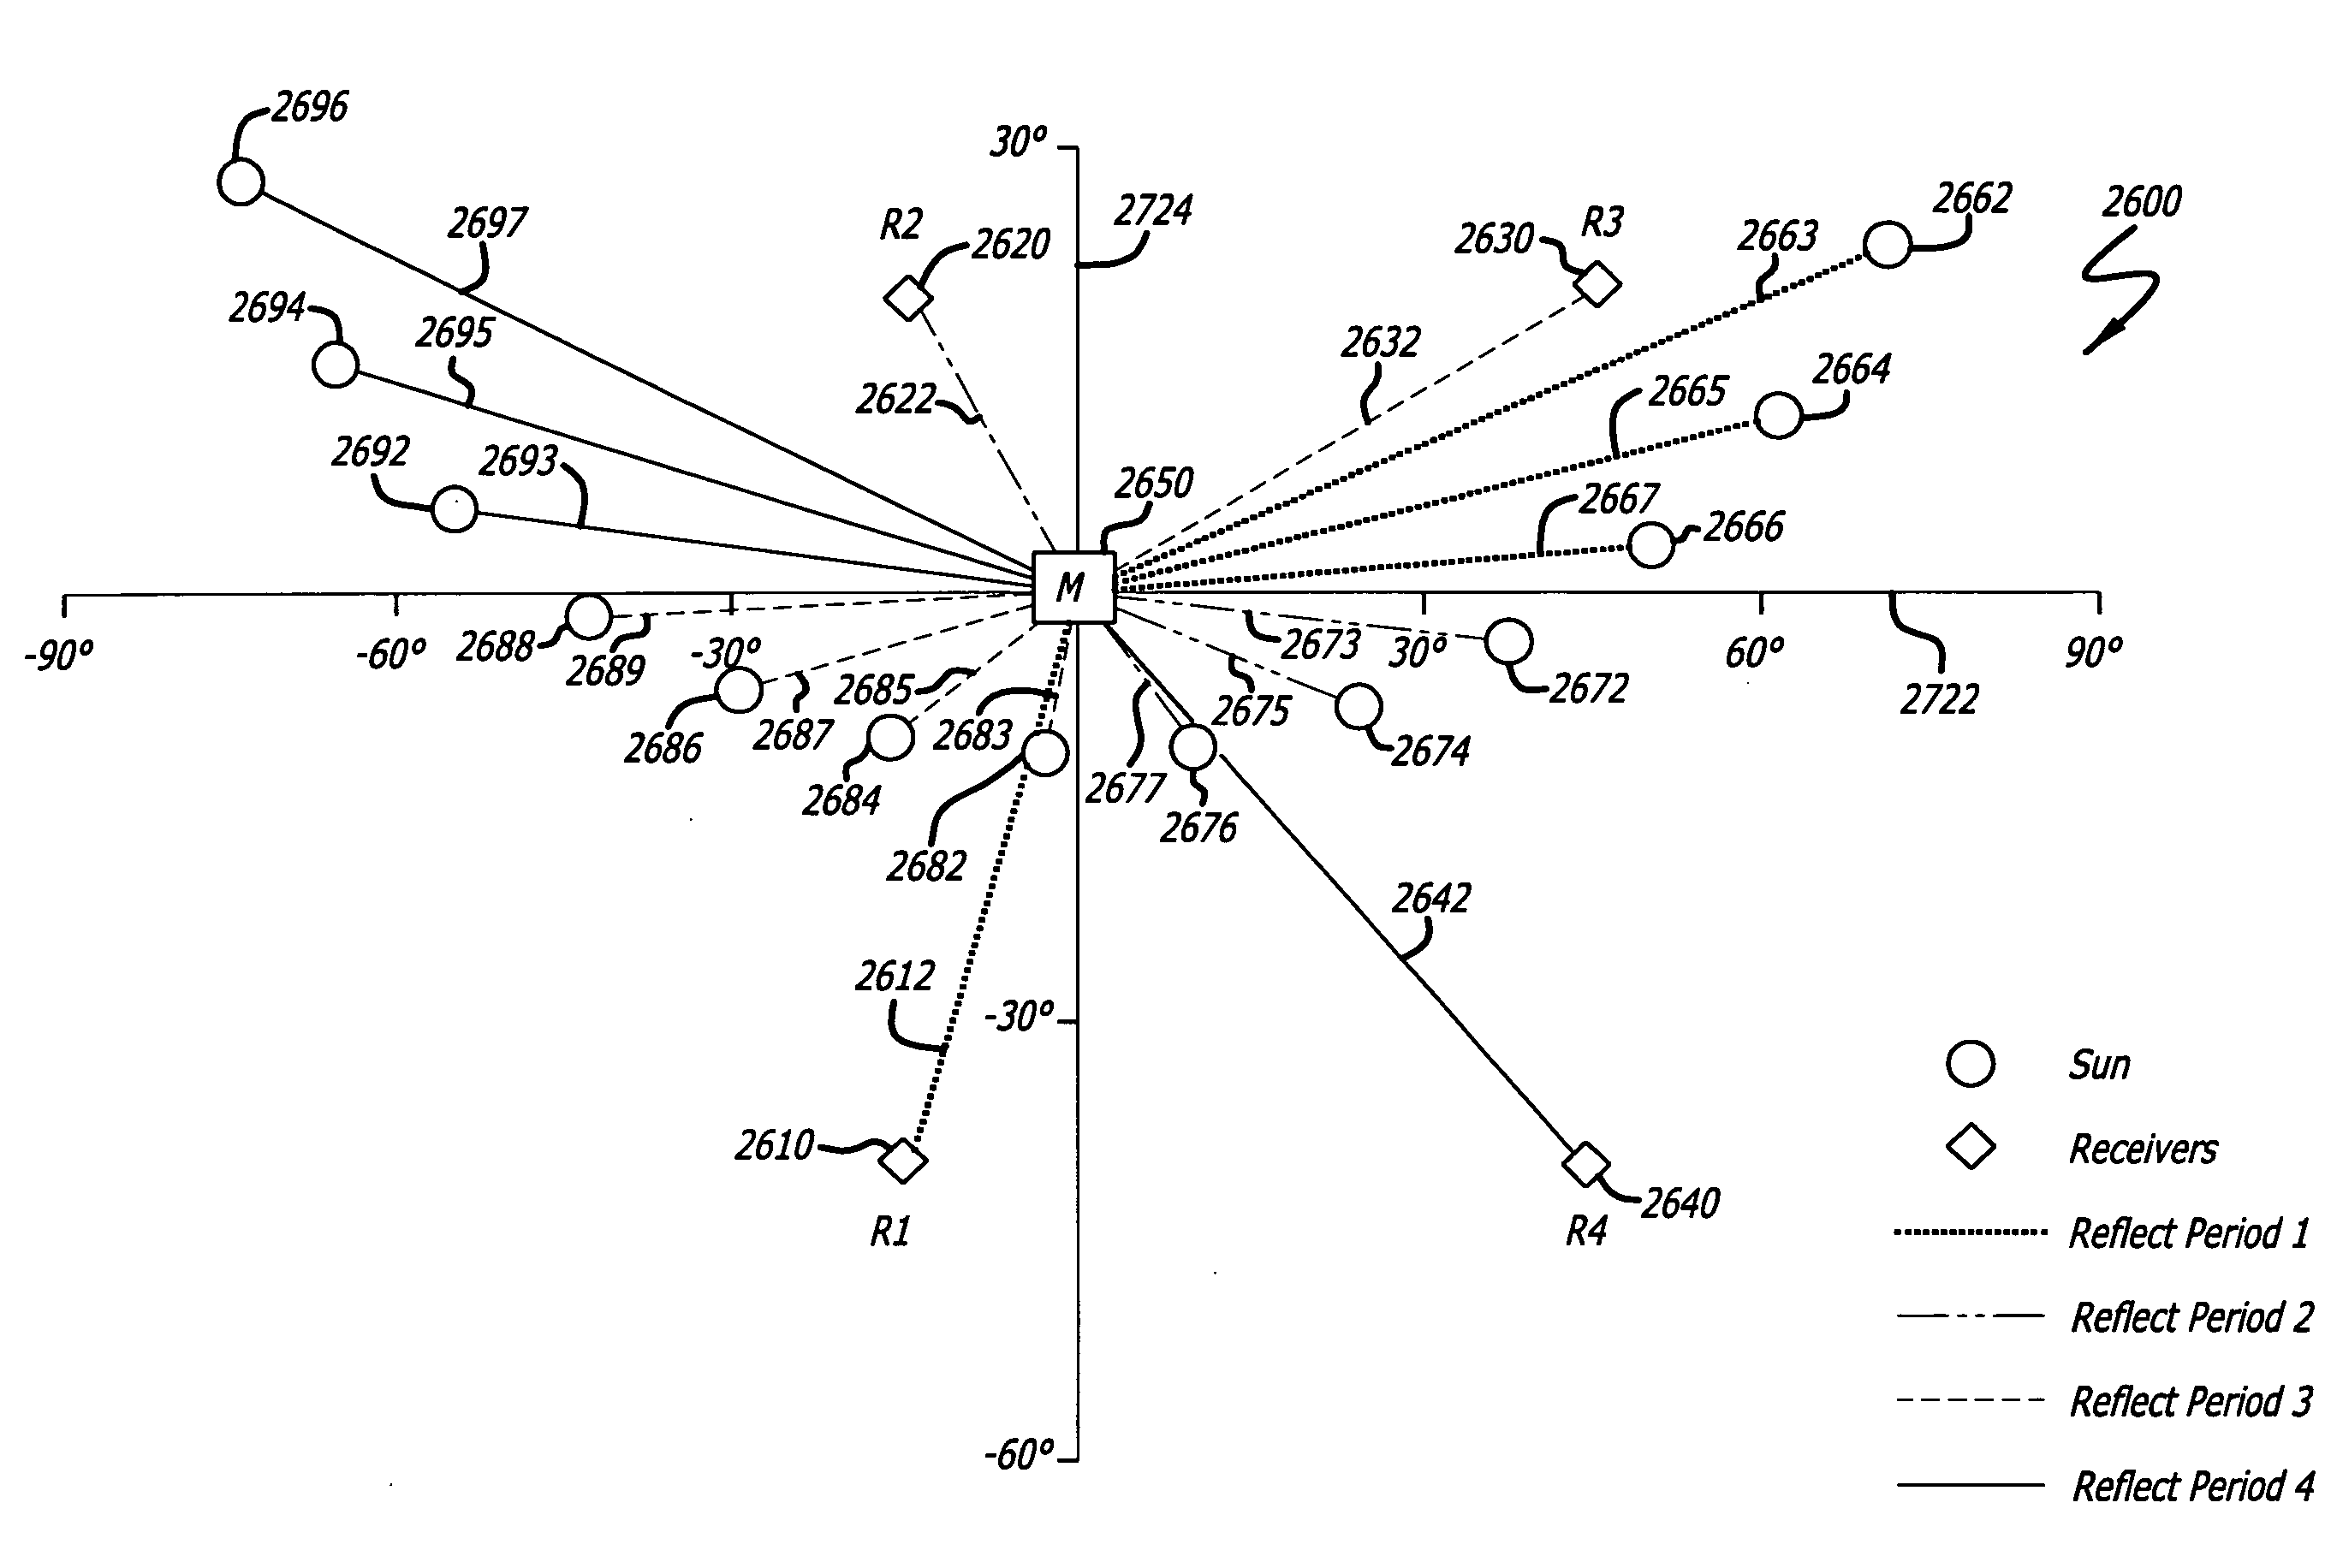 Multi-receiver heliostat system architecture